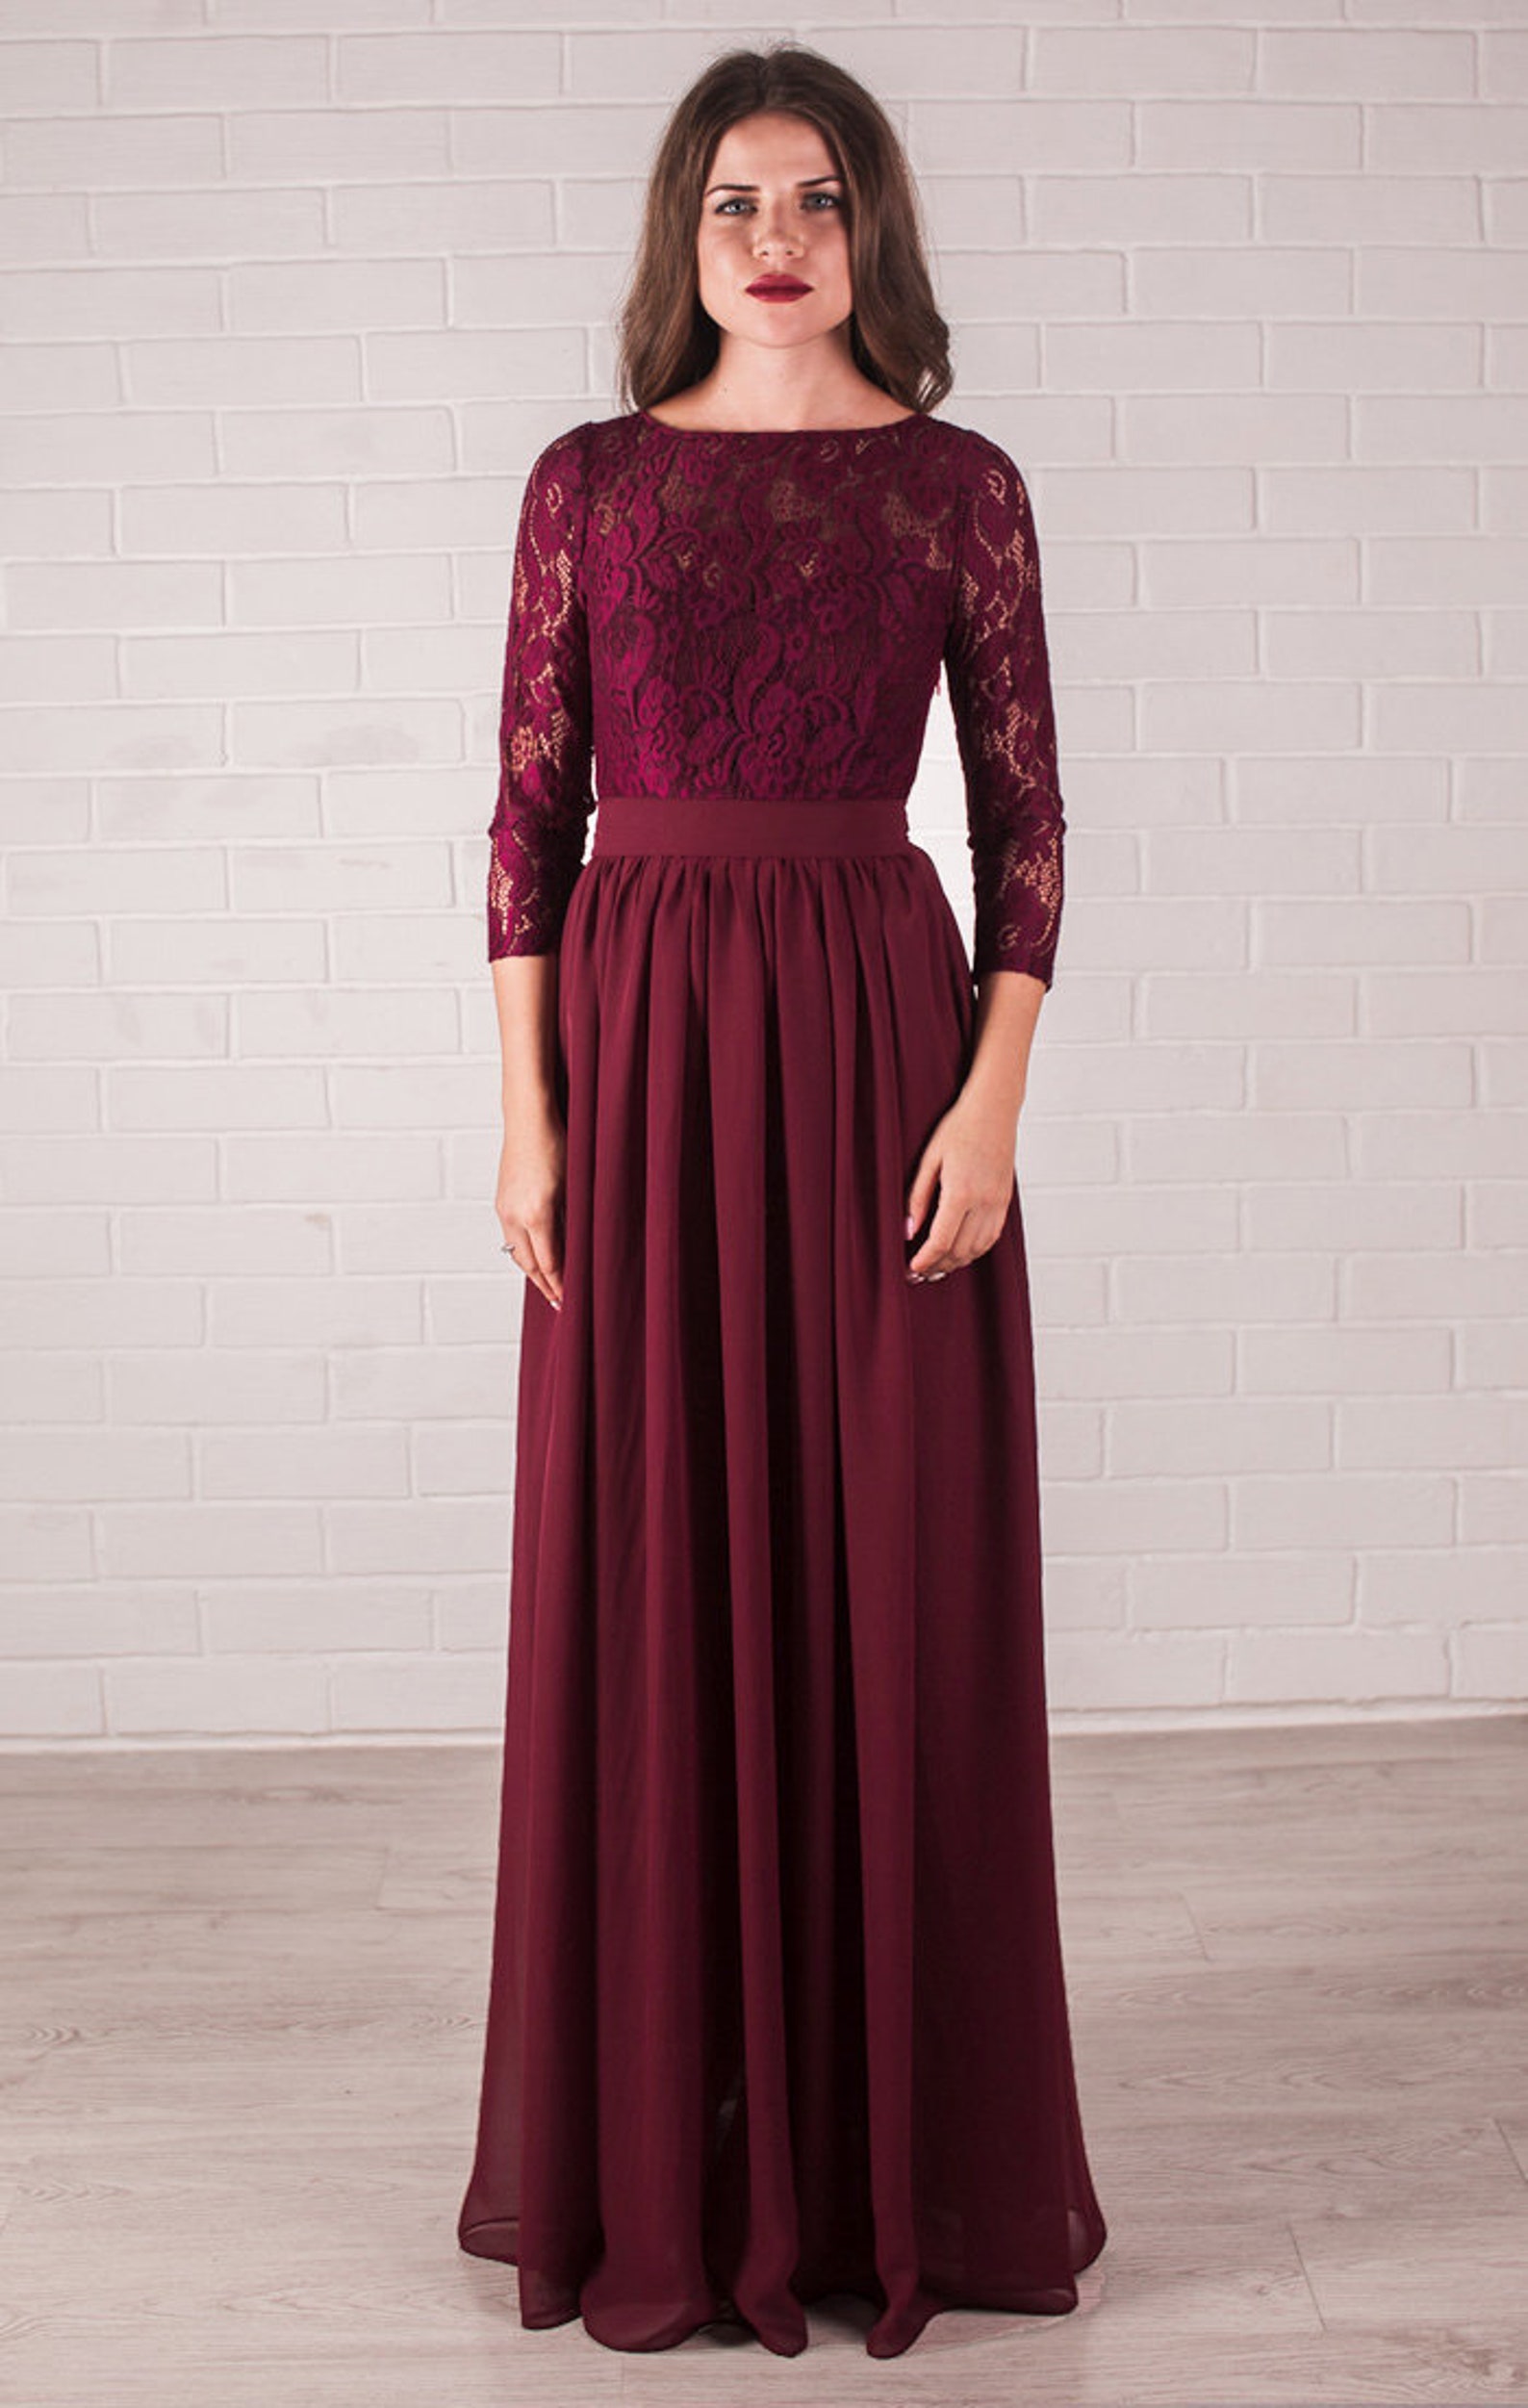 Burgundy bridesmaid dress wine evening dress lace dress with | Etsy